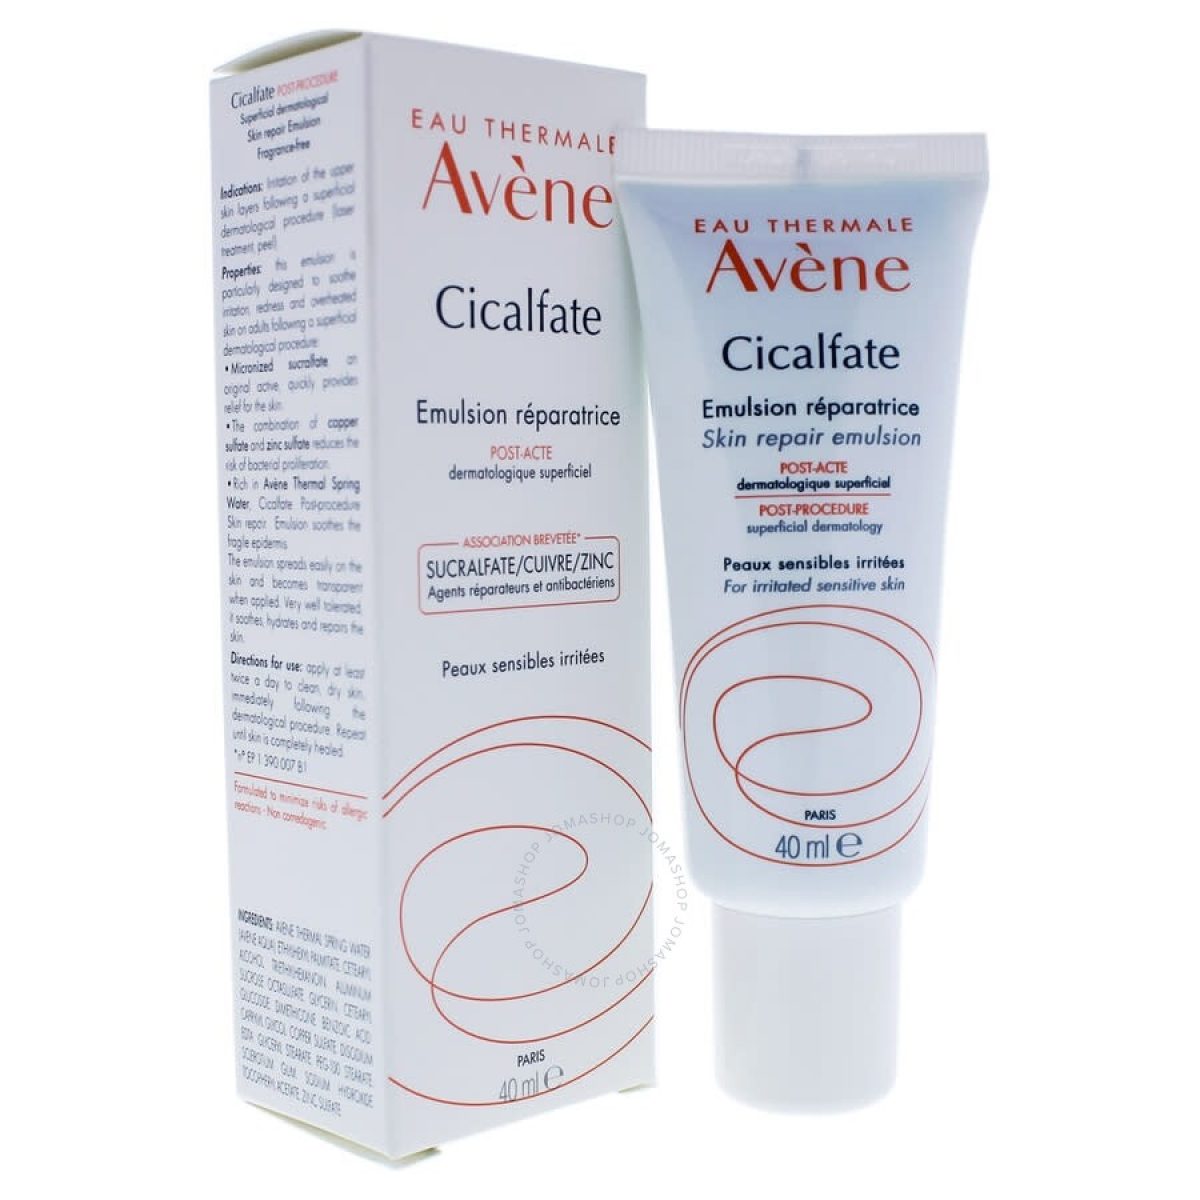 Avene - Cicalfate Emulsion Post-Act *40 ml